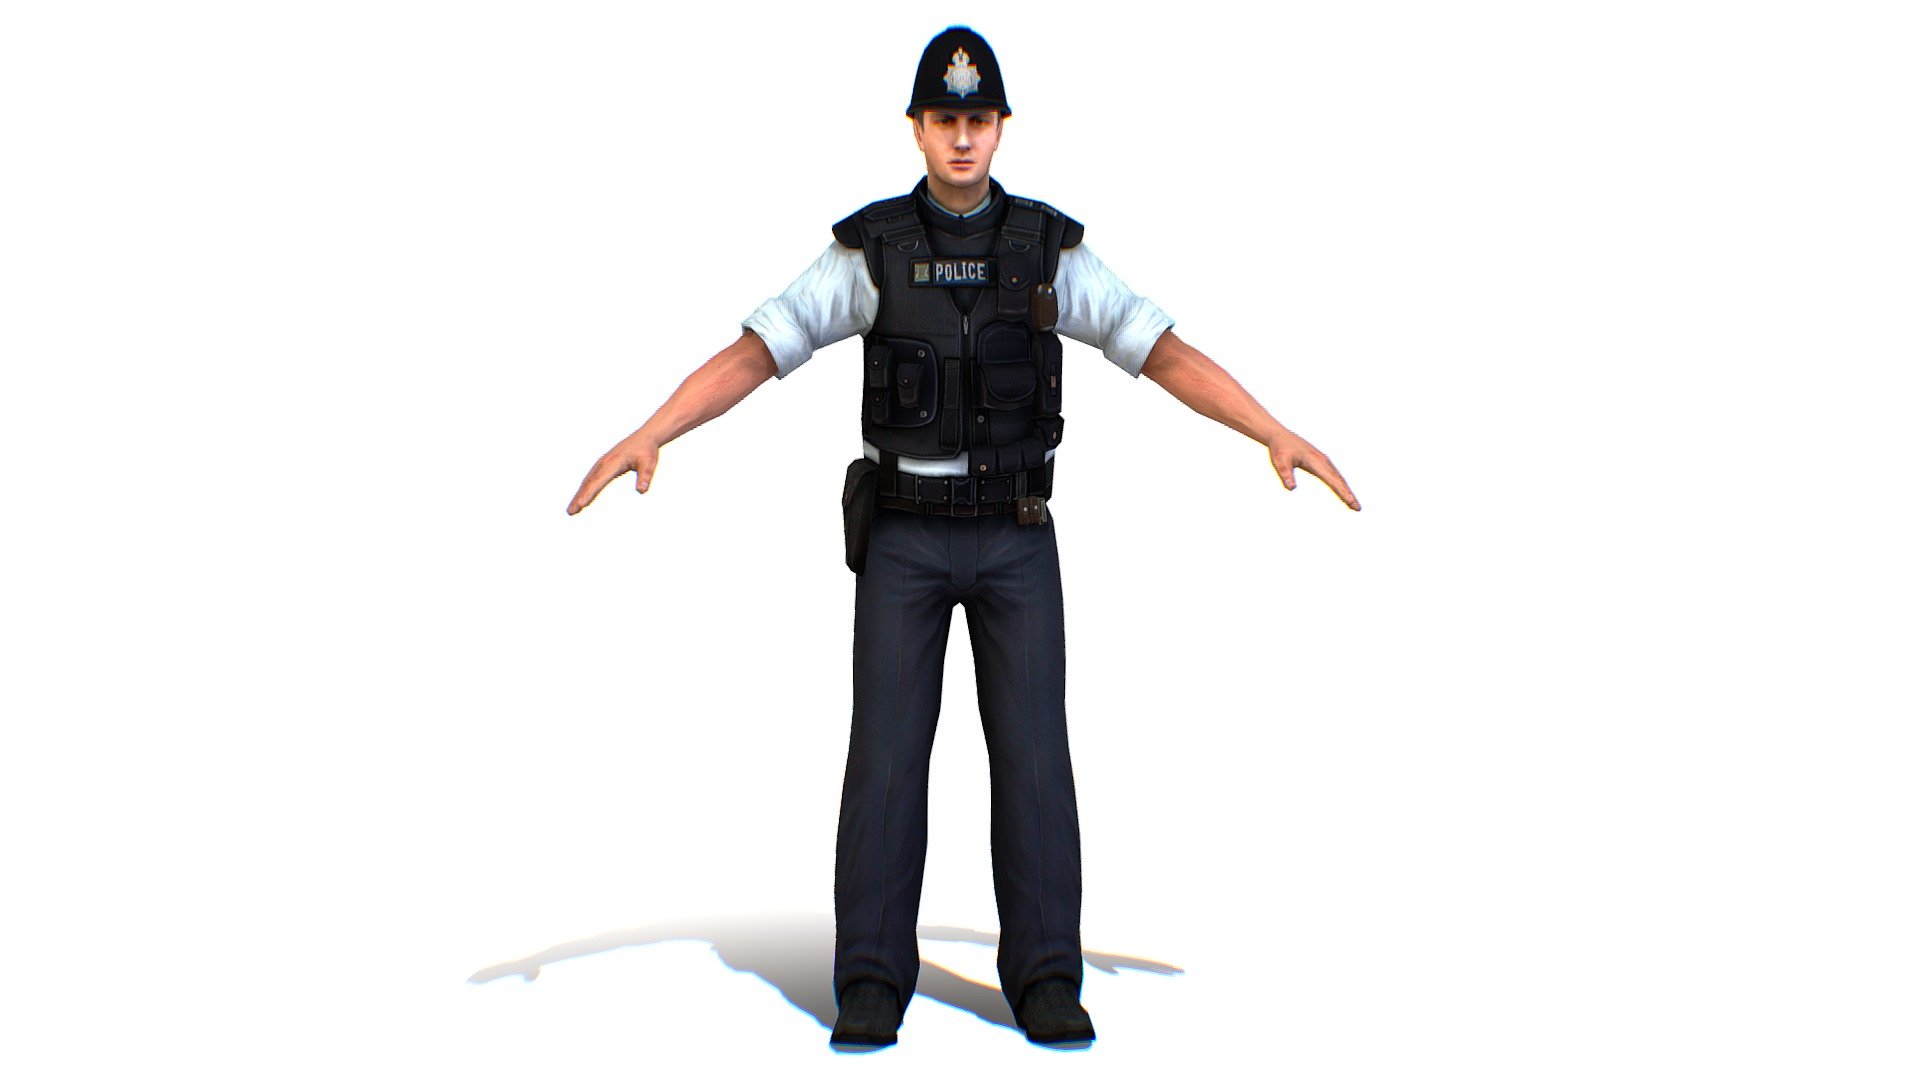 low poly 3d model. London Man Police Officer Gendarme - Maya, 3DsMax, OBJ, FBX file included. 2x textures color/normal/specular - London Man Police Officer Gendarme - Buy Royalty Free 3D model by Oleg Shuldiakov (@olegshuldiakov) 3d model